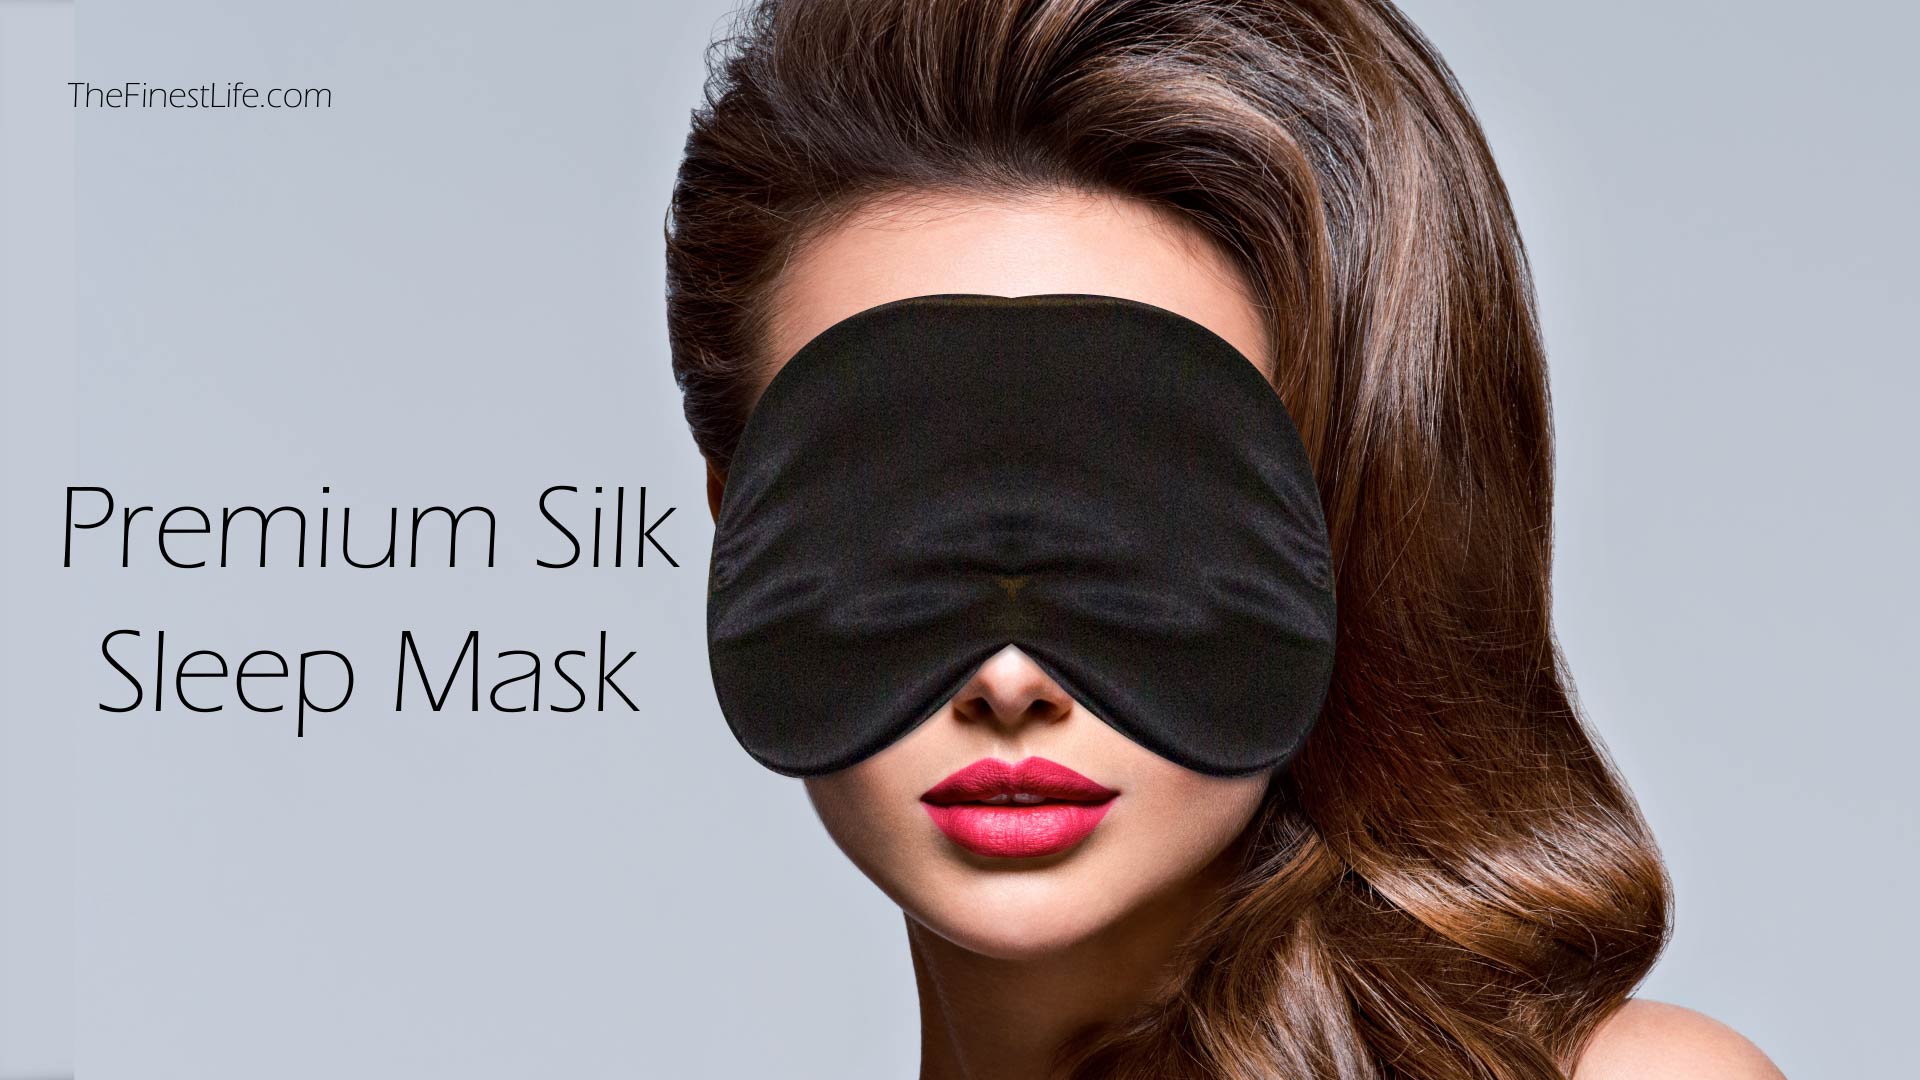 Premium Silk Sleep Mask The Finest Life 